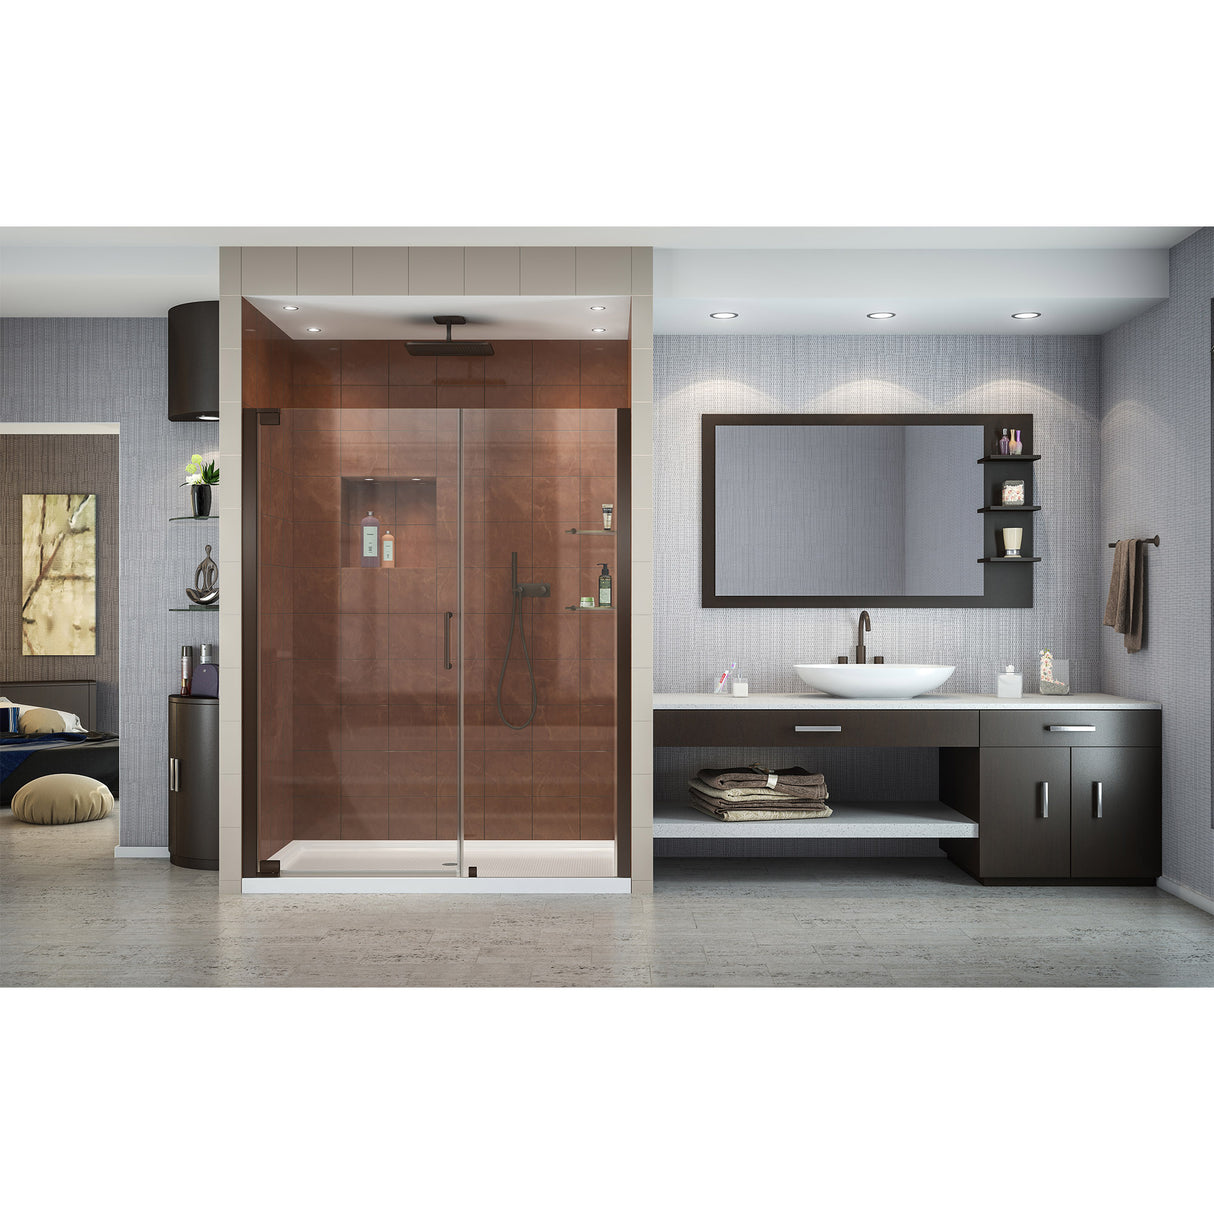 DreamLine Elegance 58-60 in. W x 72 in. H Frameless Pivot Shower Door in Oil Rubbed Bronze